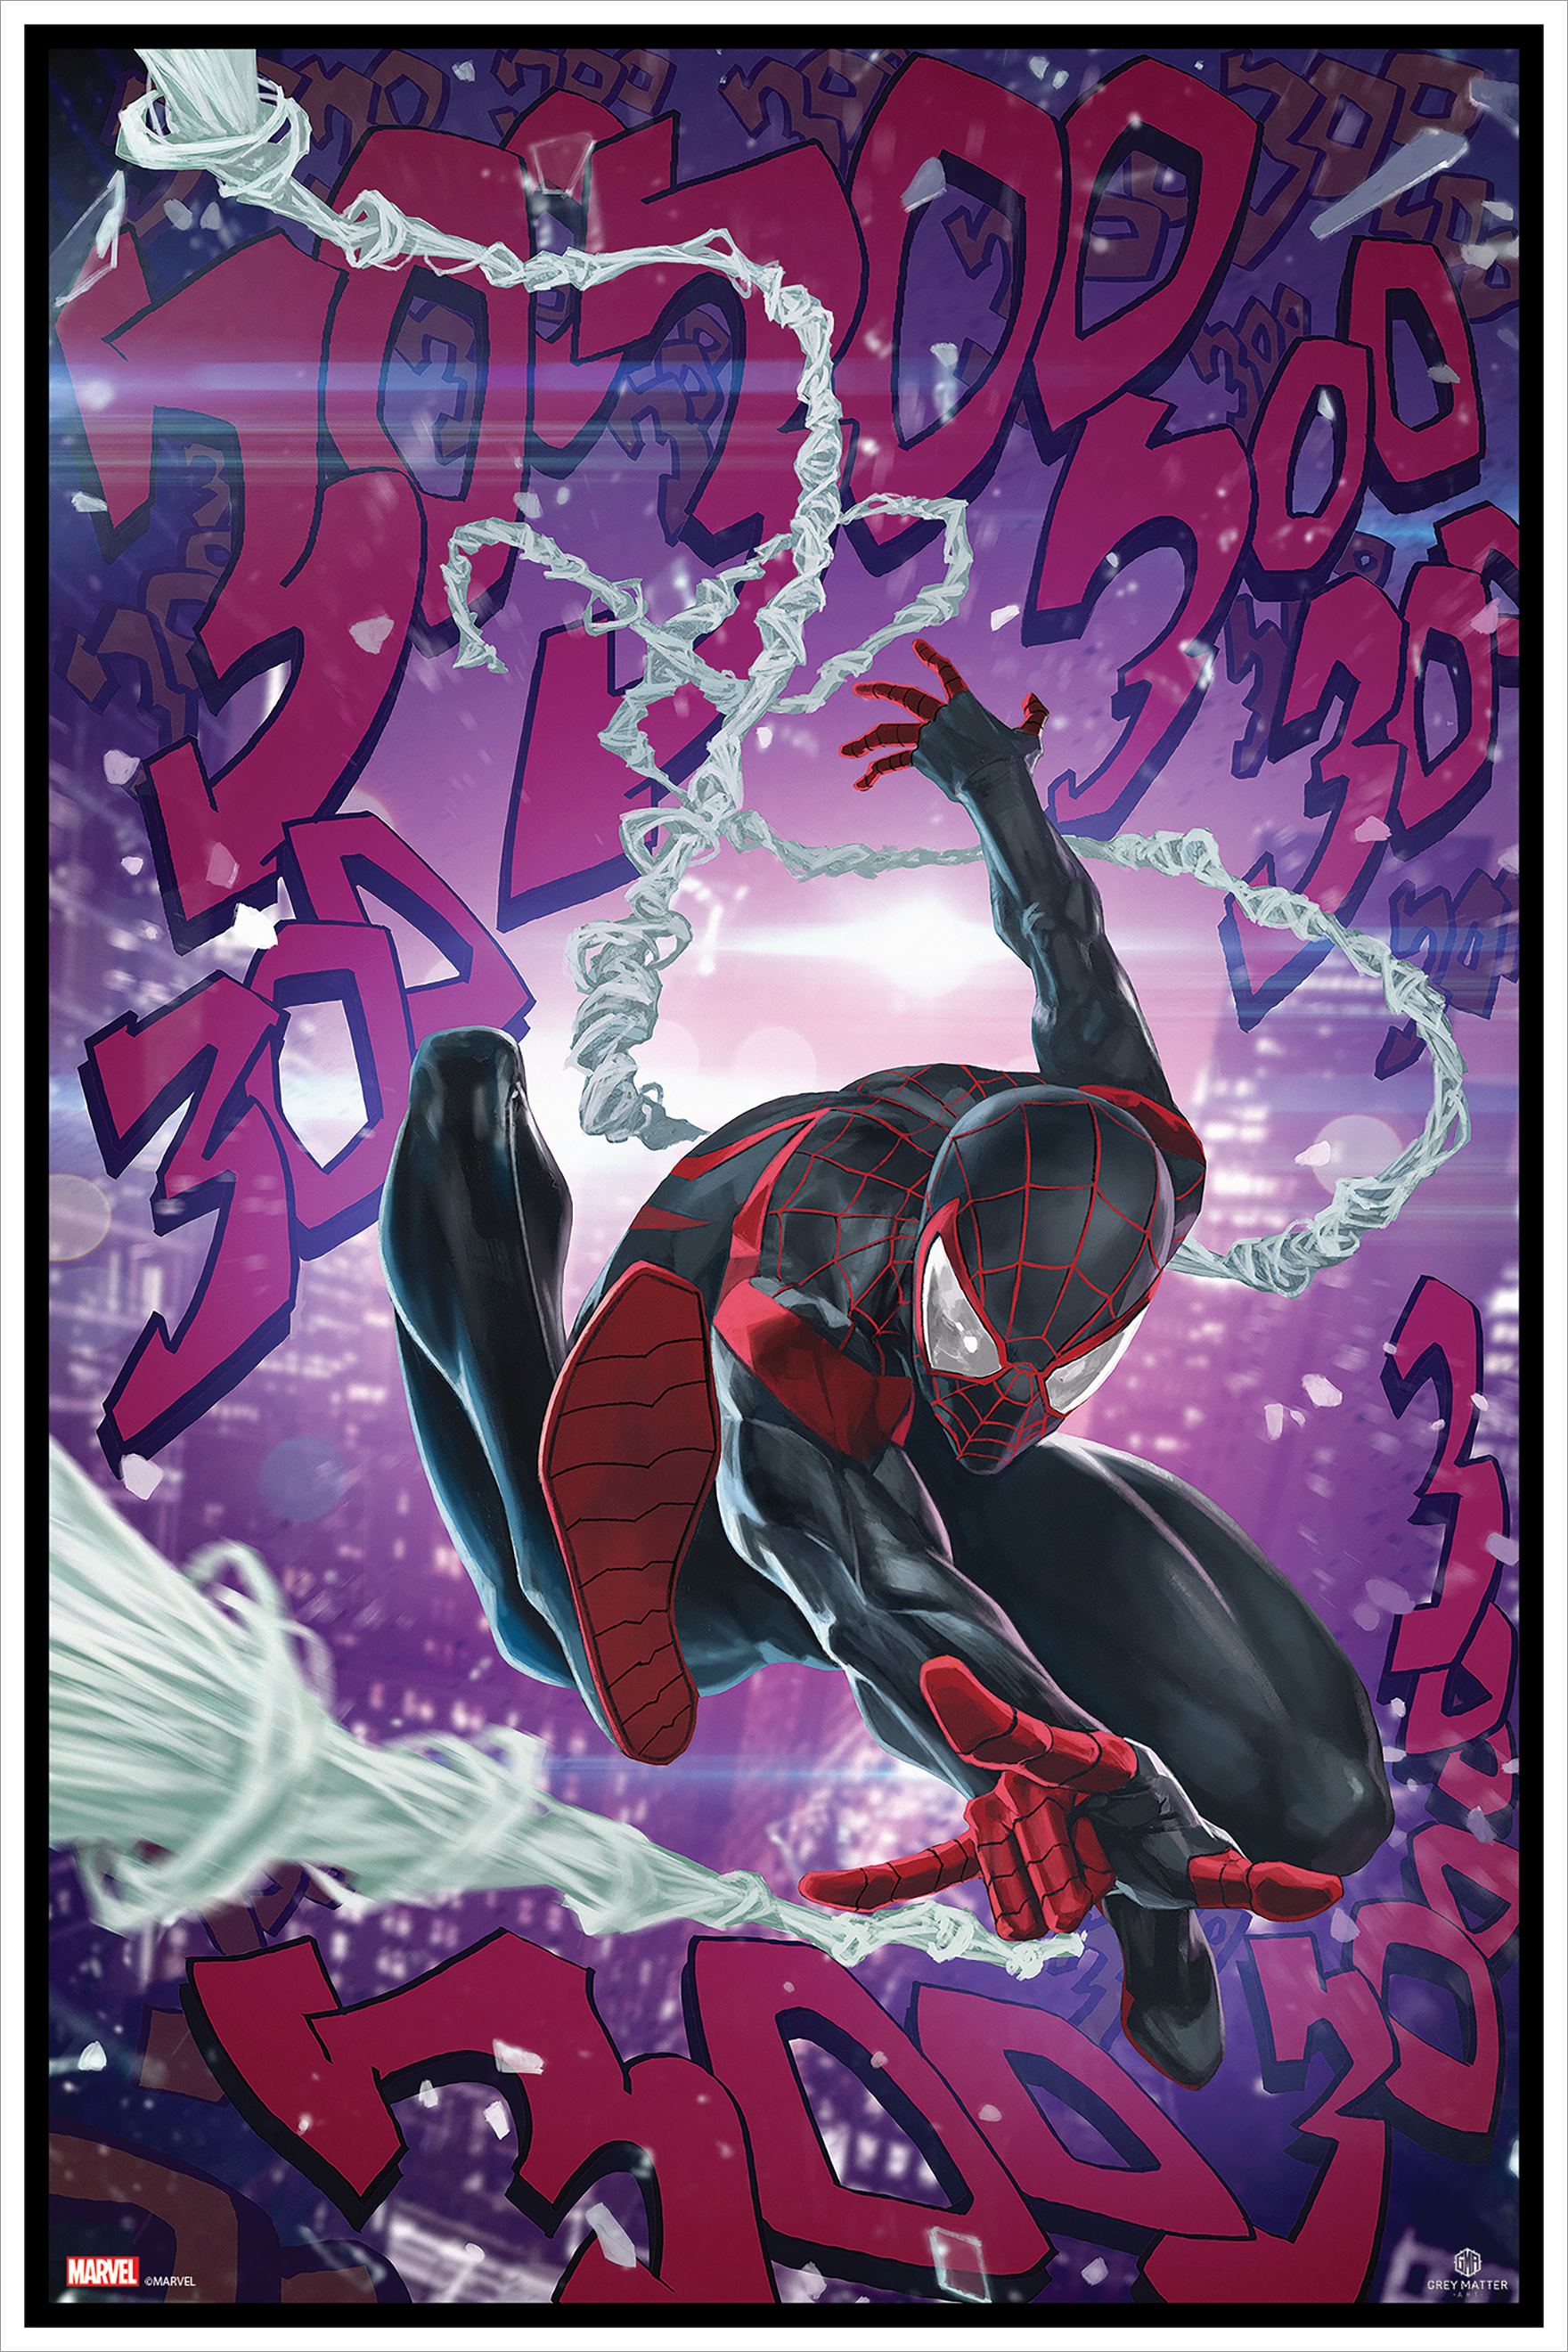 admiración pelota China Miles Morales Spider-Man #19 by Skan Srisuwan – Grey Matter Art